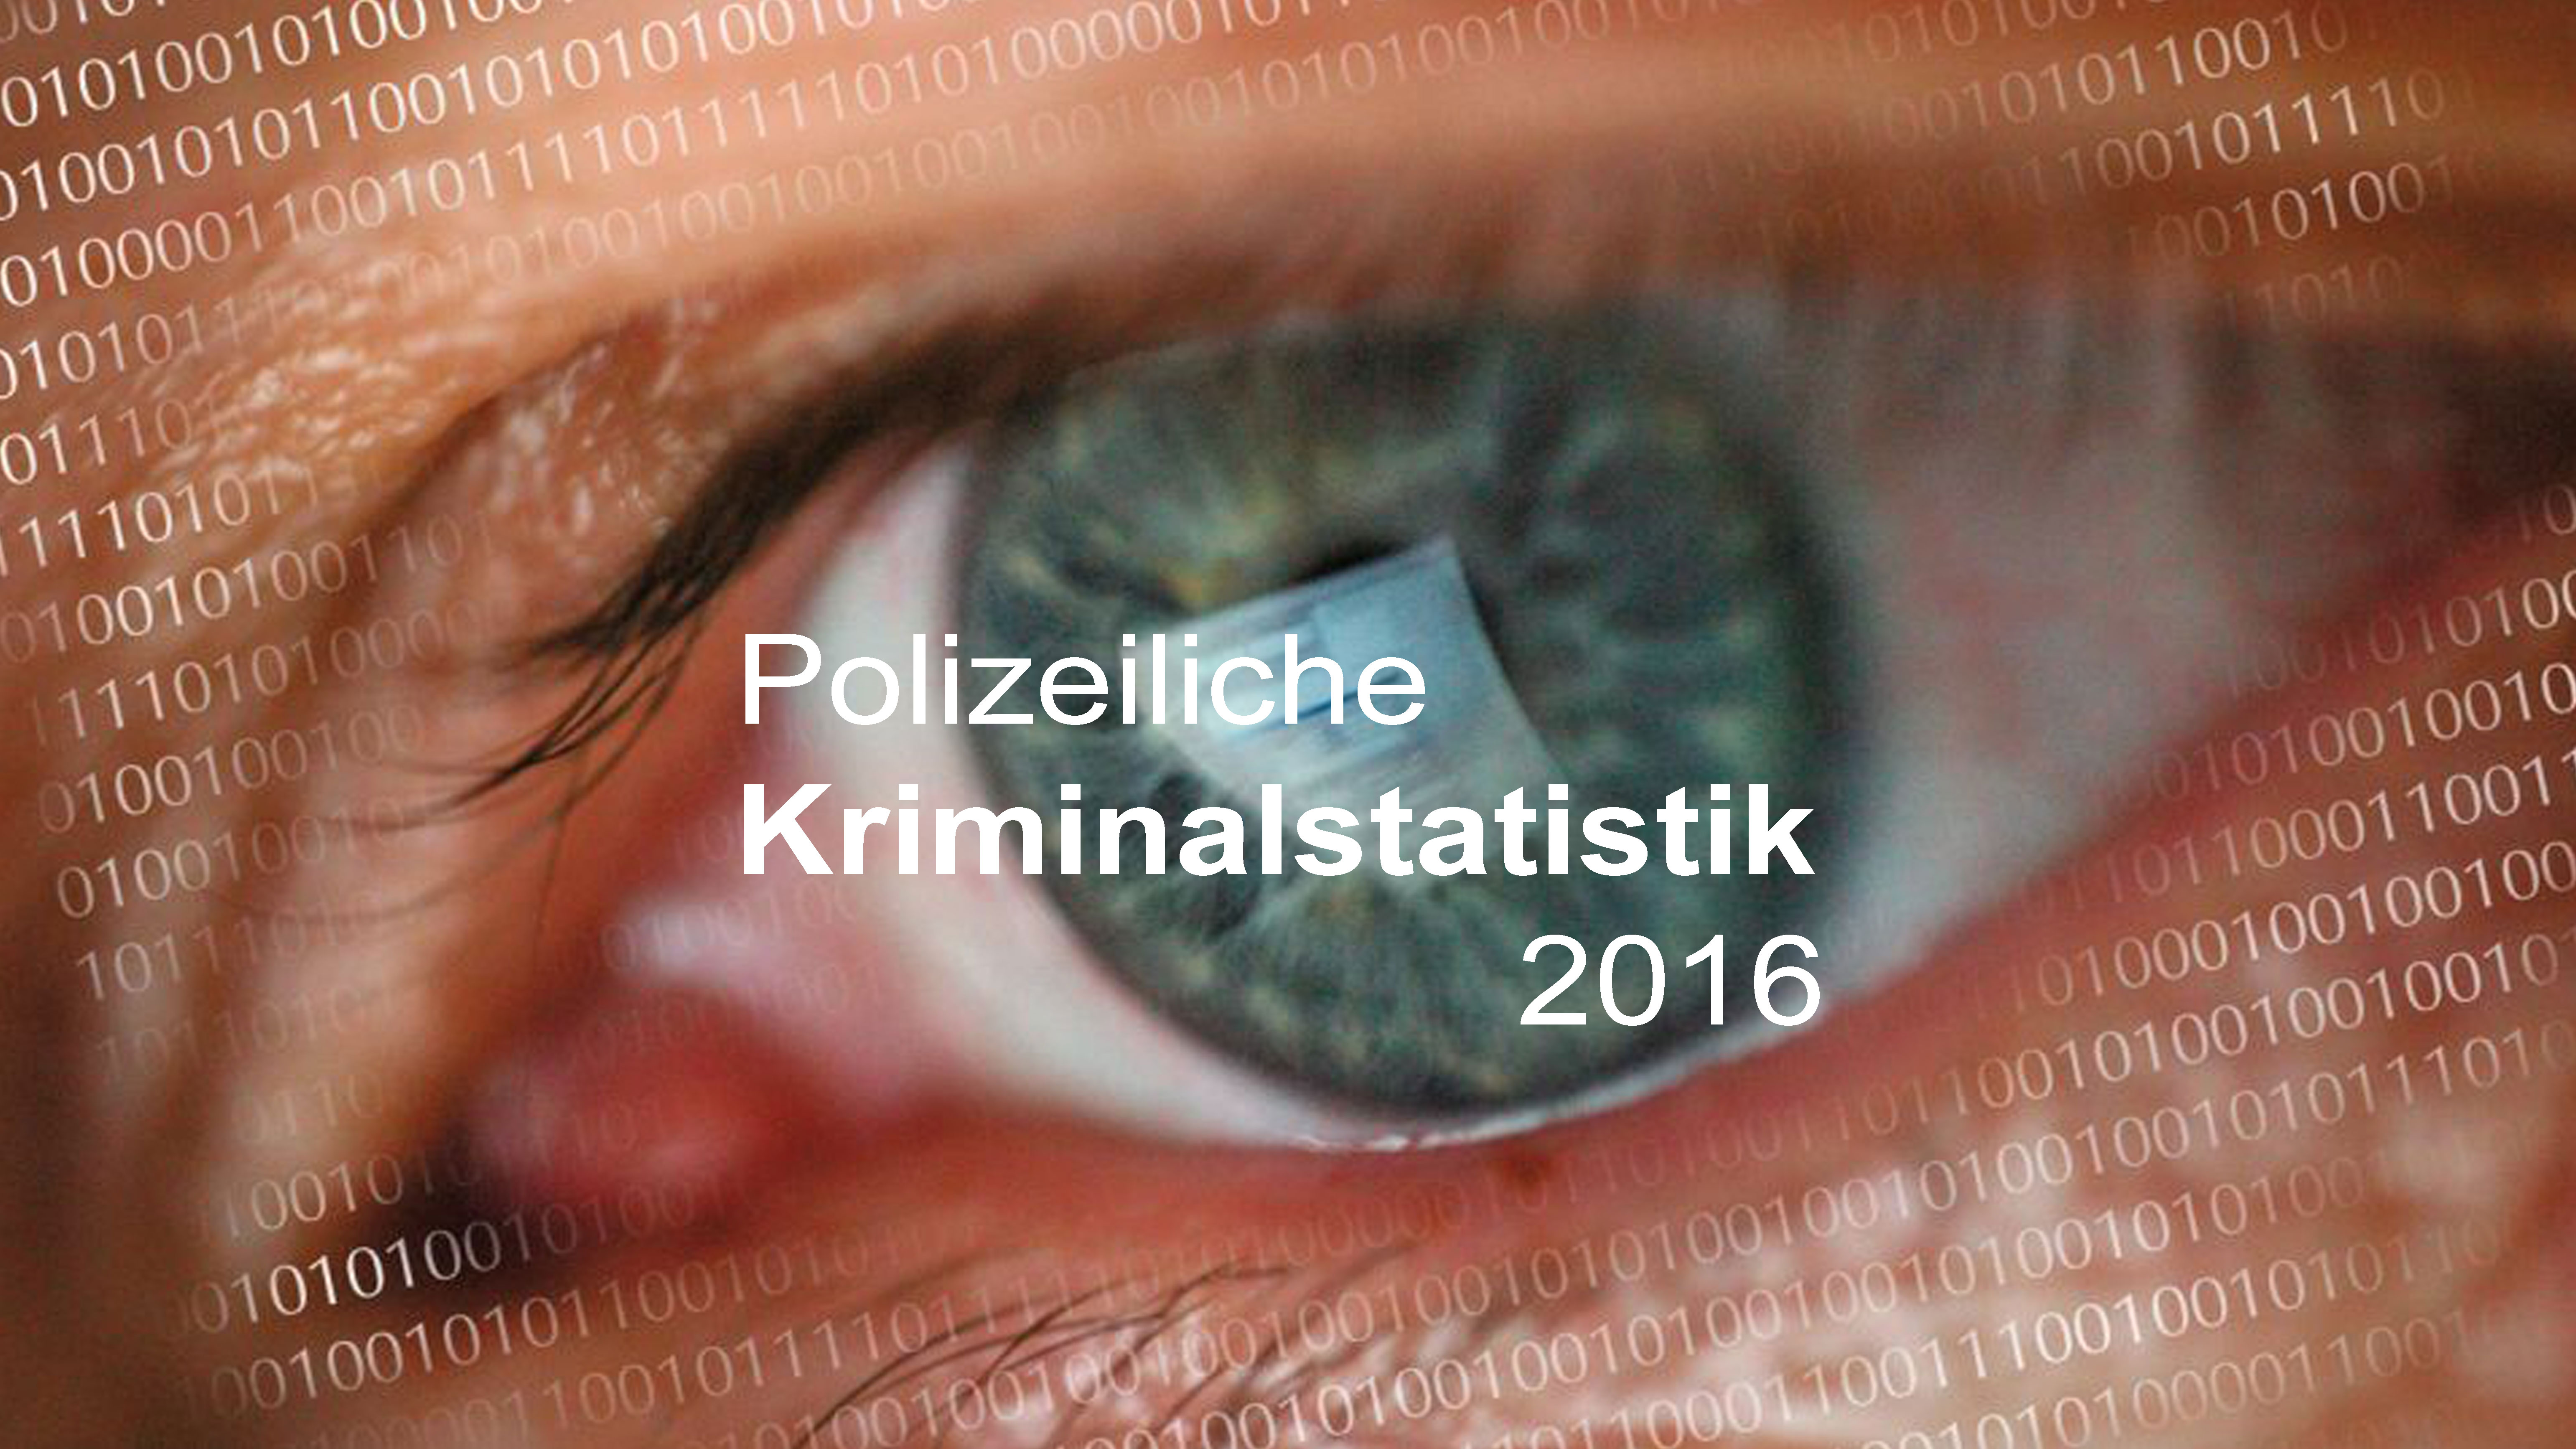 Police crime statistics 2016